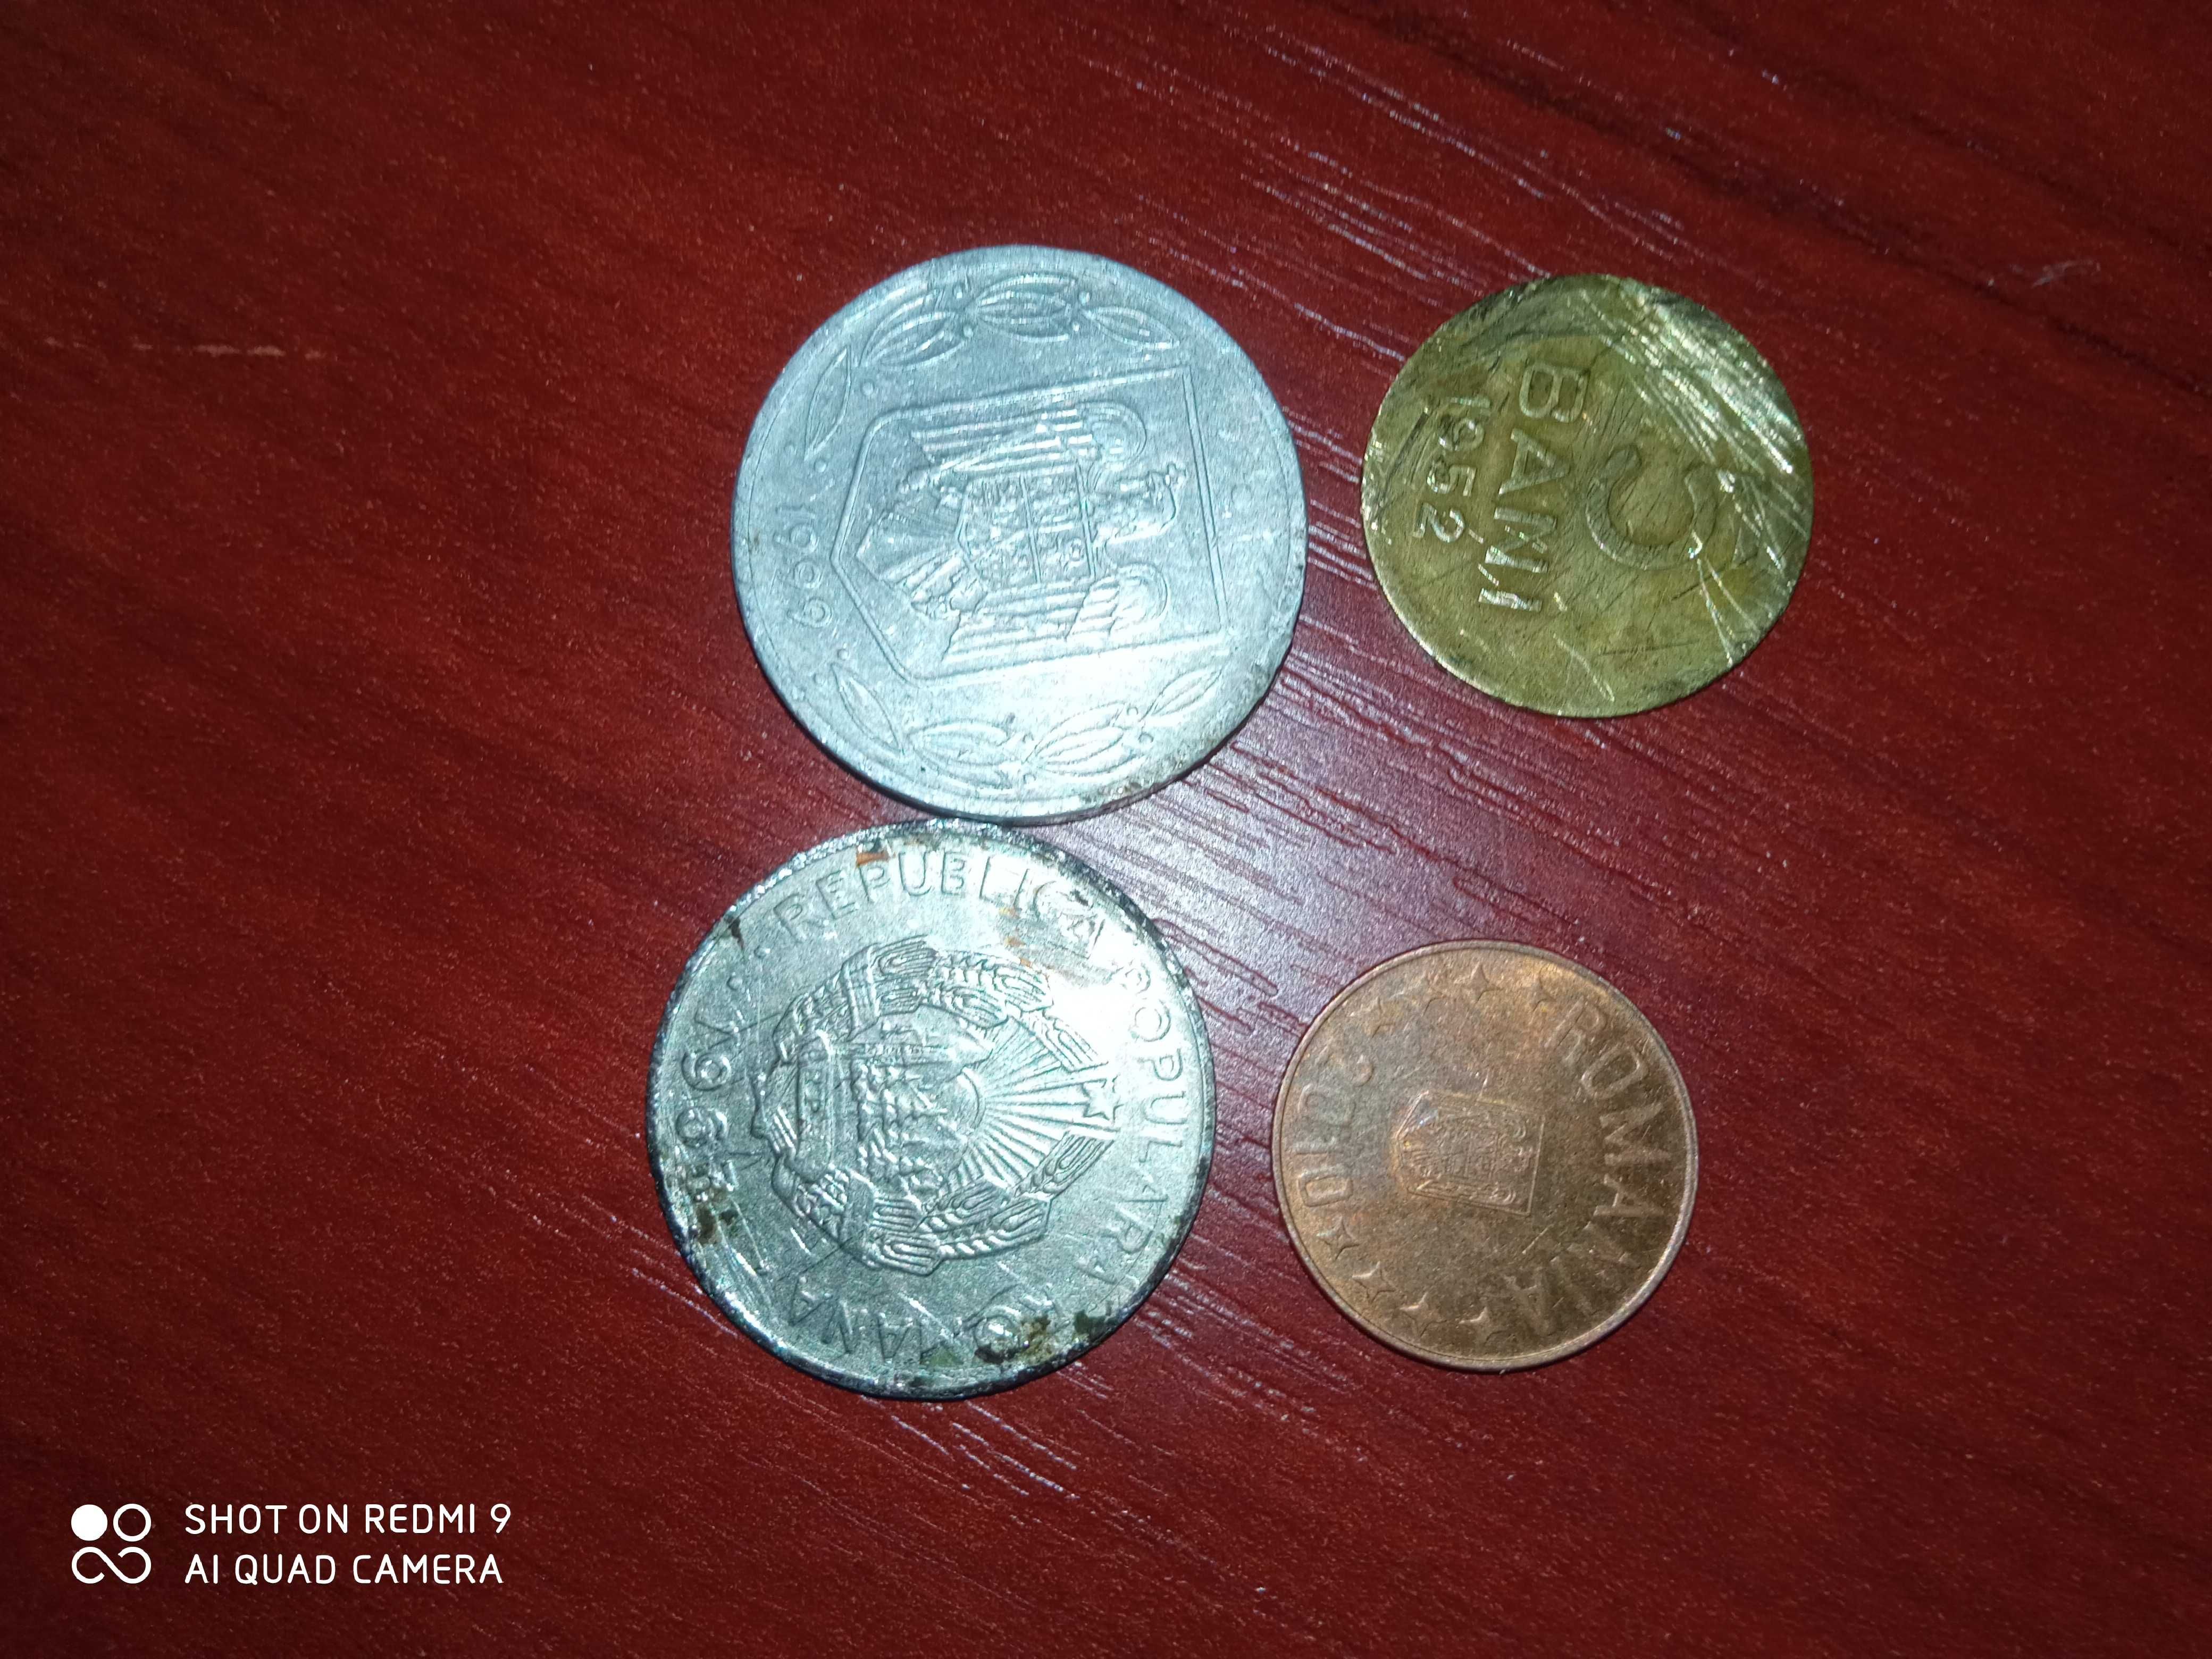 Monede vechi Moneda 1 leu 1966 preț:300 lei !